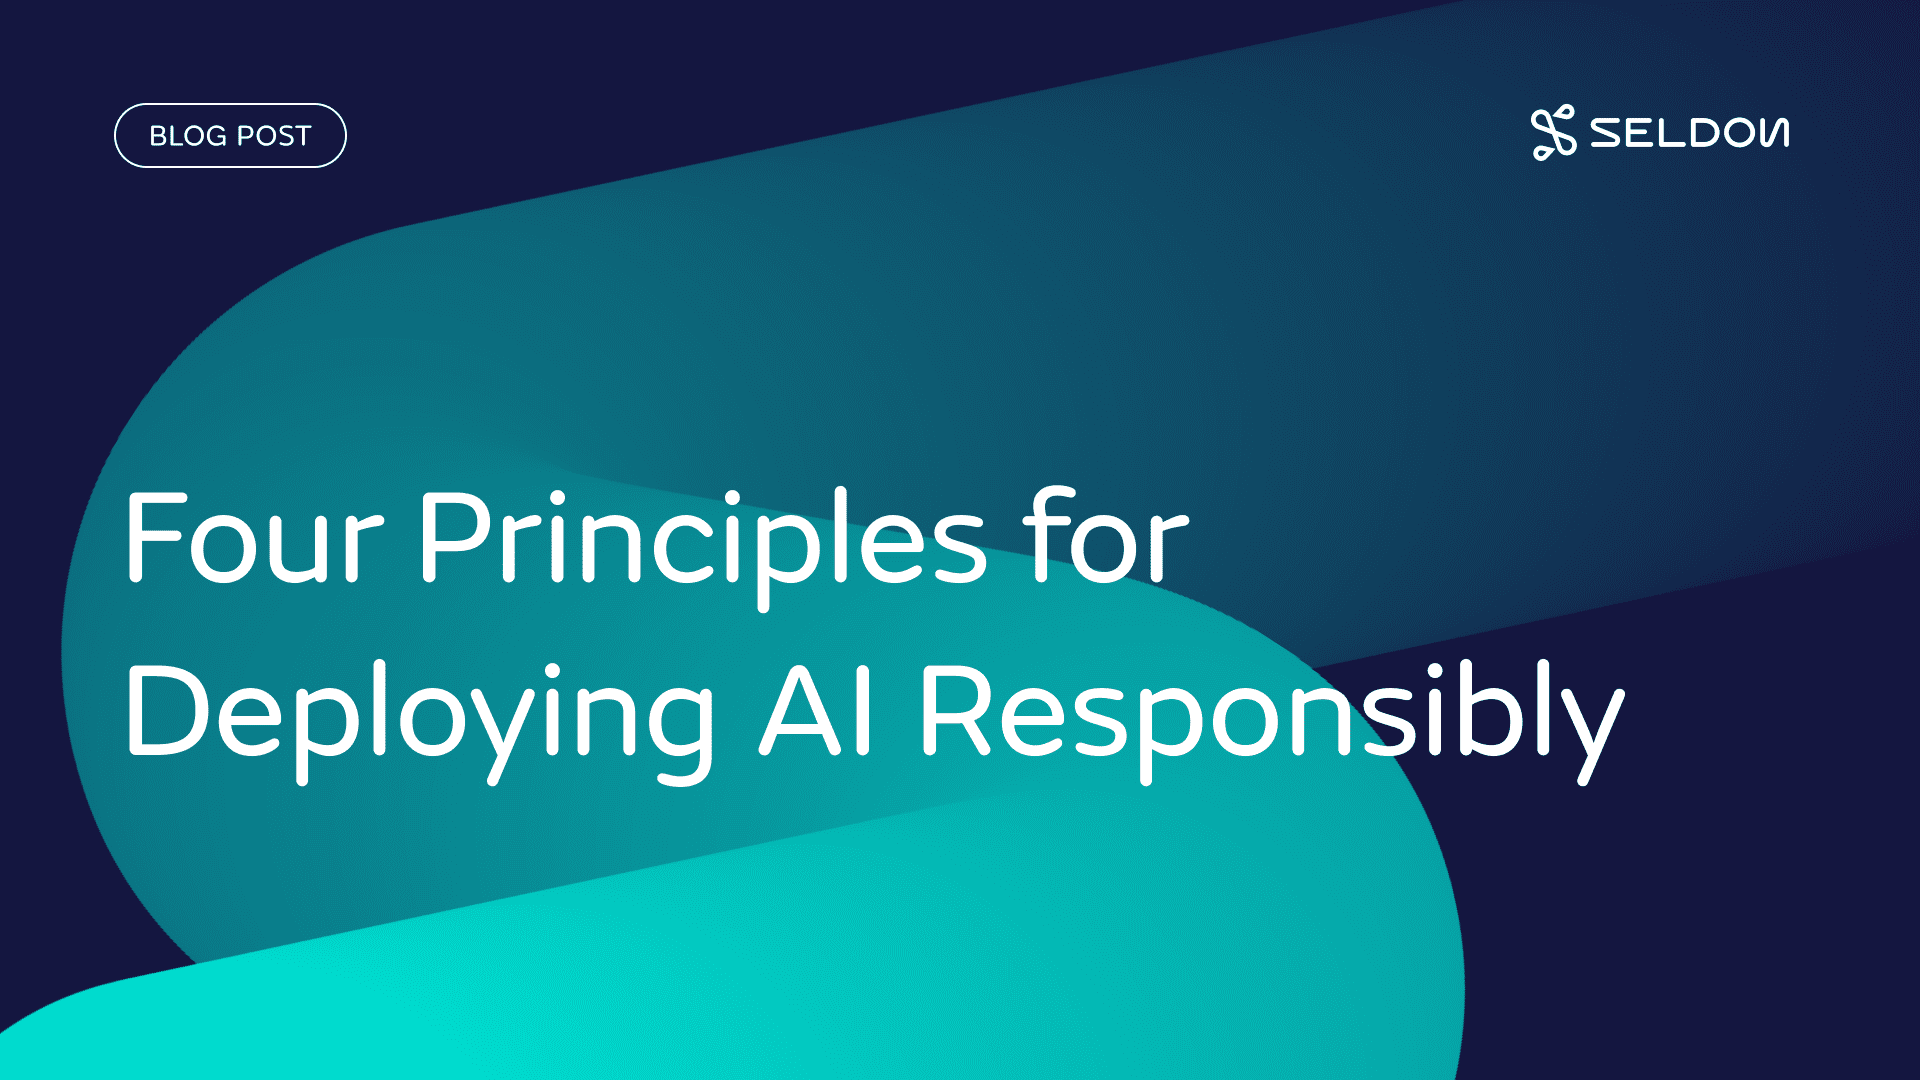 Four principles for deploying AI responsibly